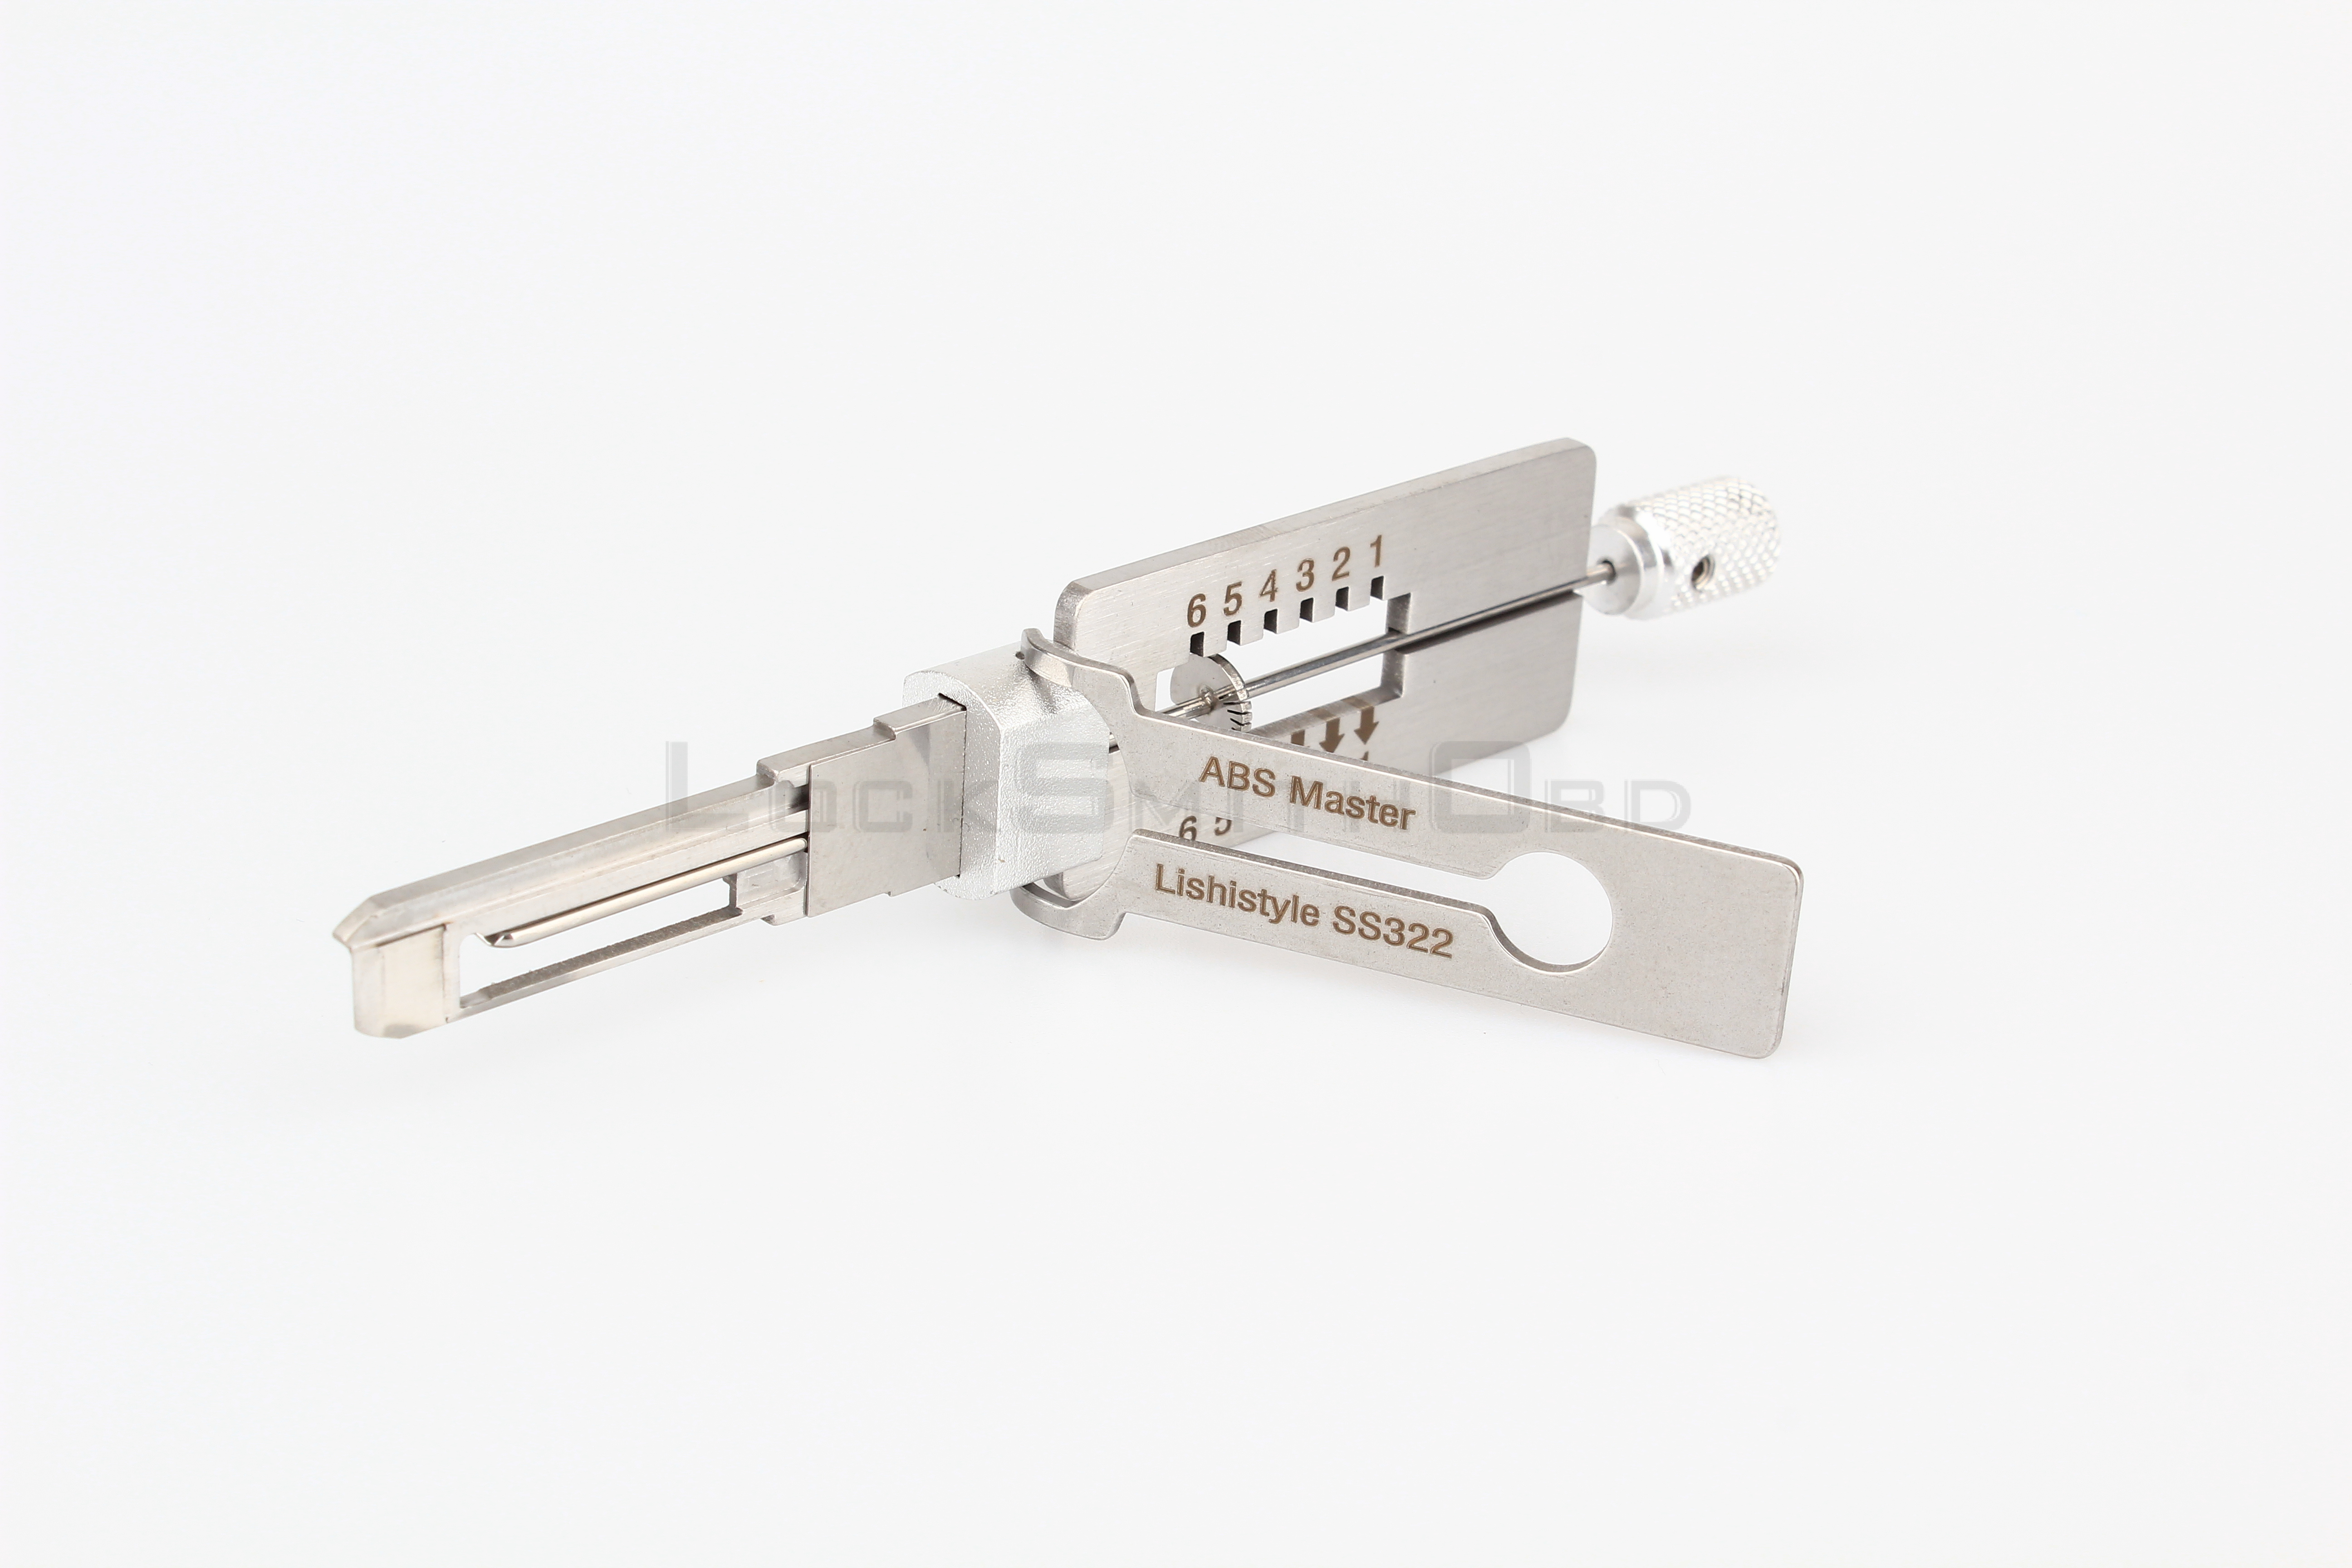 New LISHI Style SS322 ABS Master 2 IN 1 Lock Pick Set Locksmith Tool